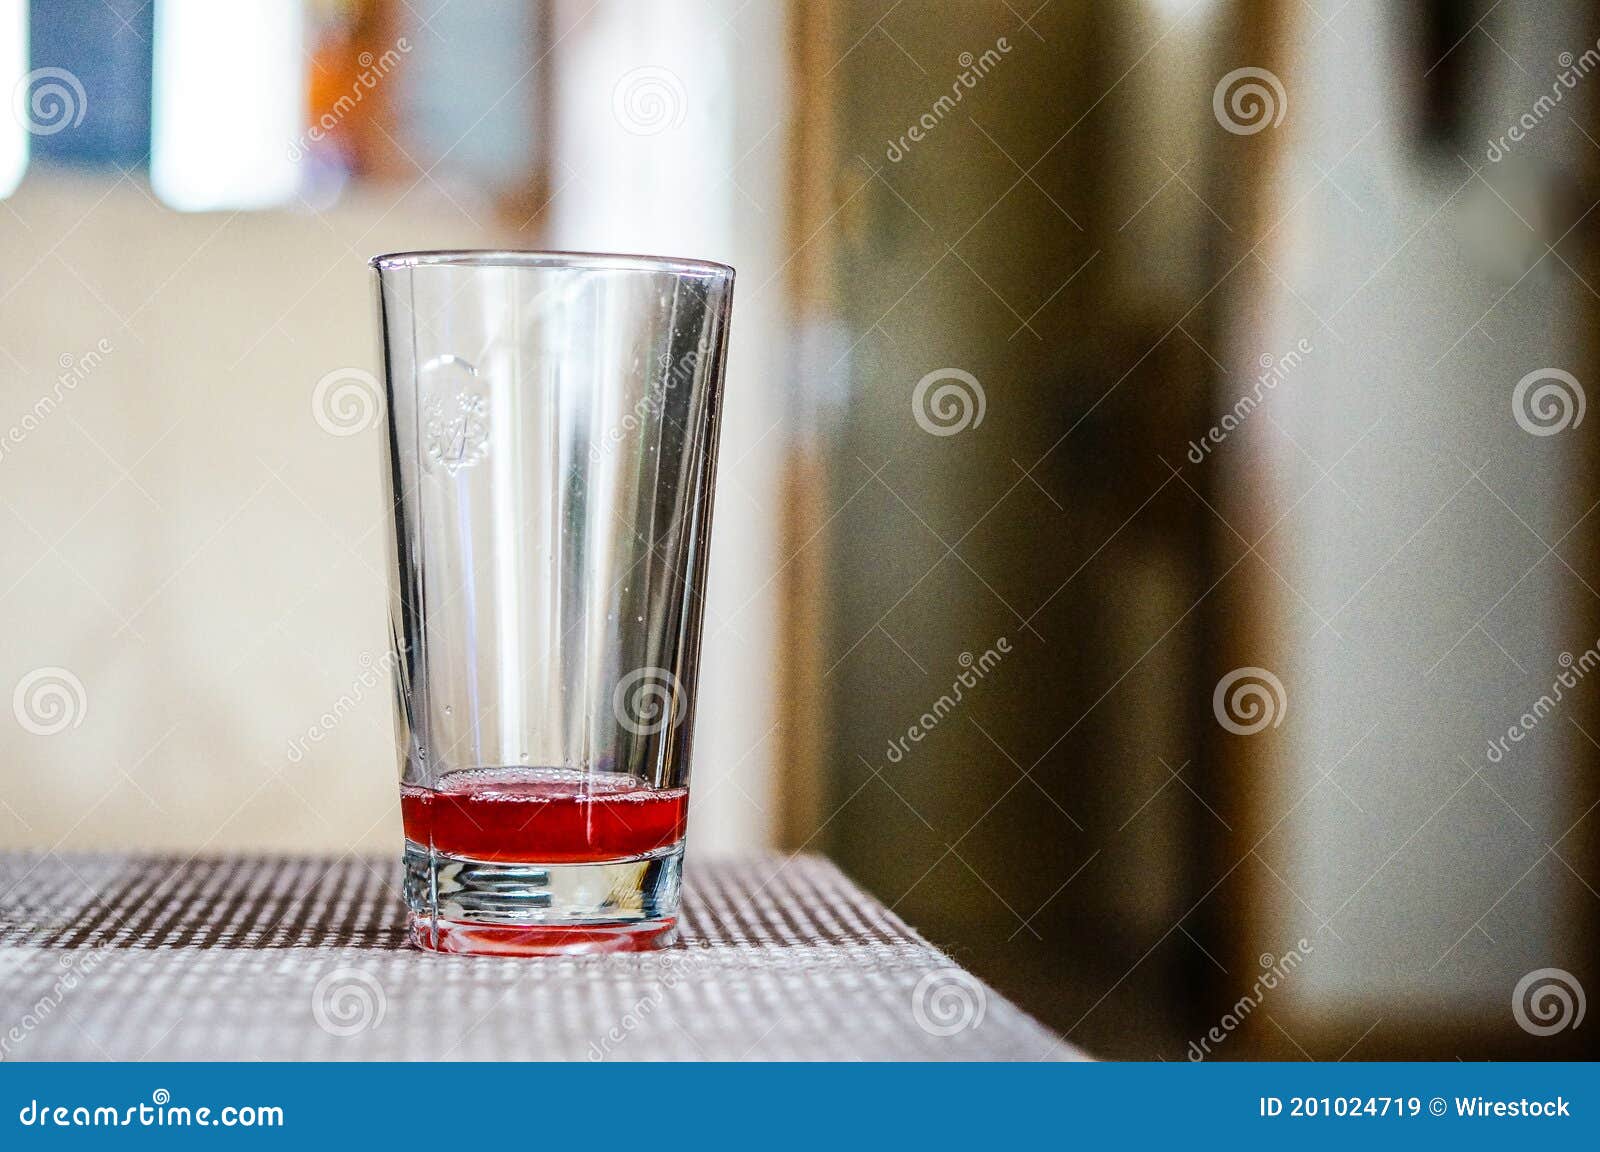 Бармен наливай пустой стакан. Пустой стакан на столе. Почти пустой стакан. Пустой стакан на столе примета. Пустой стакан фото.